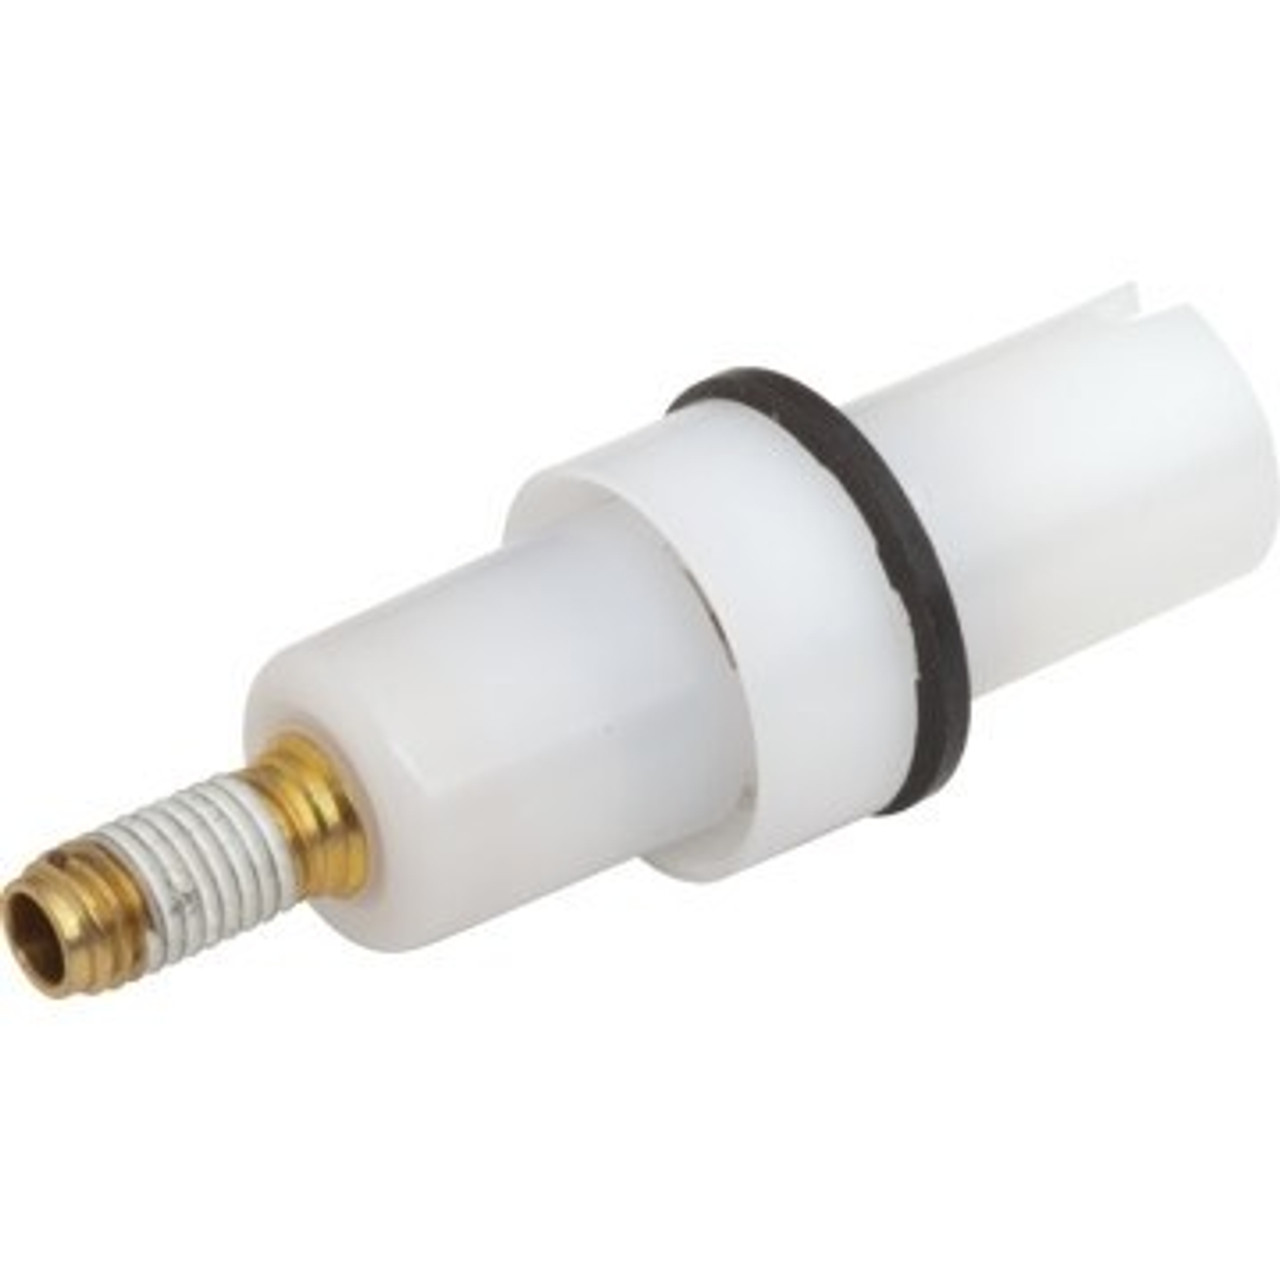 Delta Rp6073 Faucet Diverter Kit